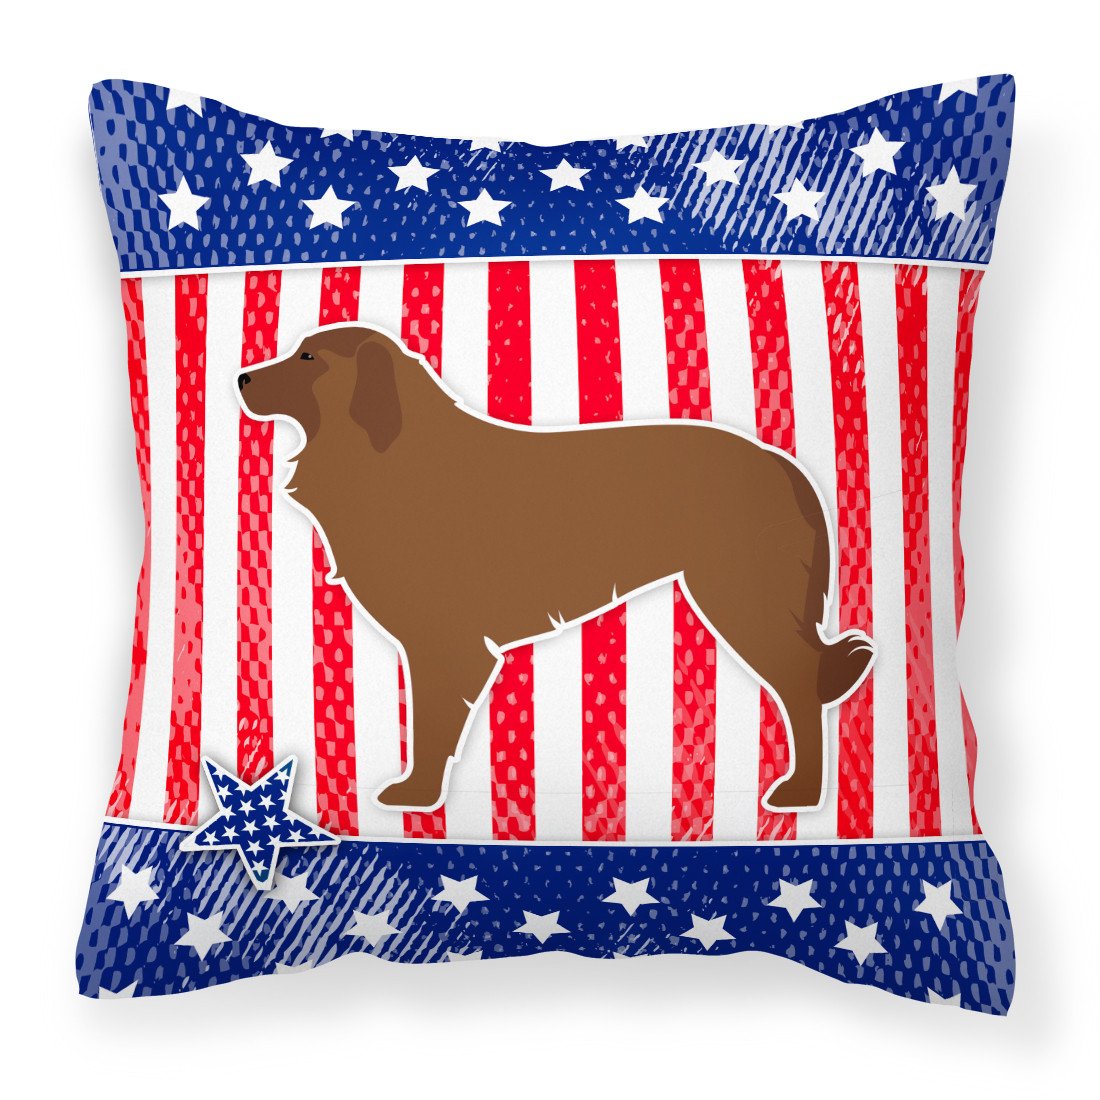 USA Patriotic Portuguese Sheepdog Dog Fabric Decorative Pillow BB3331PW1818 by Caroline's Treasures